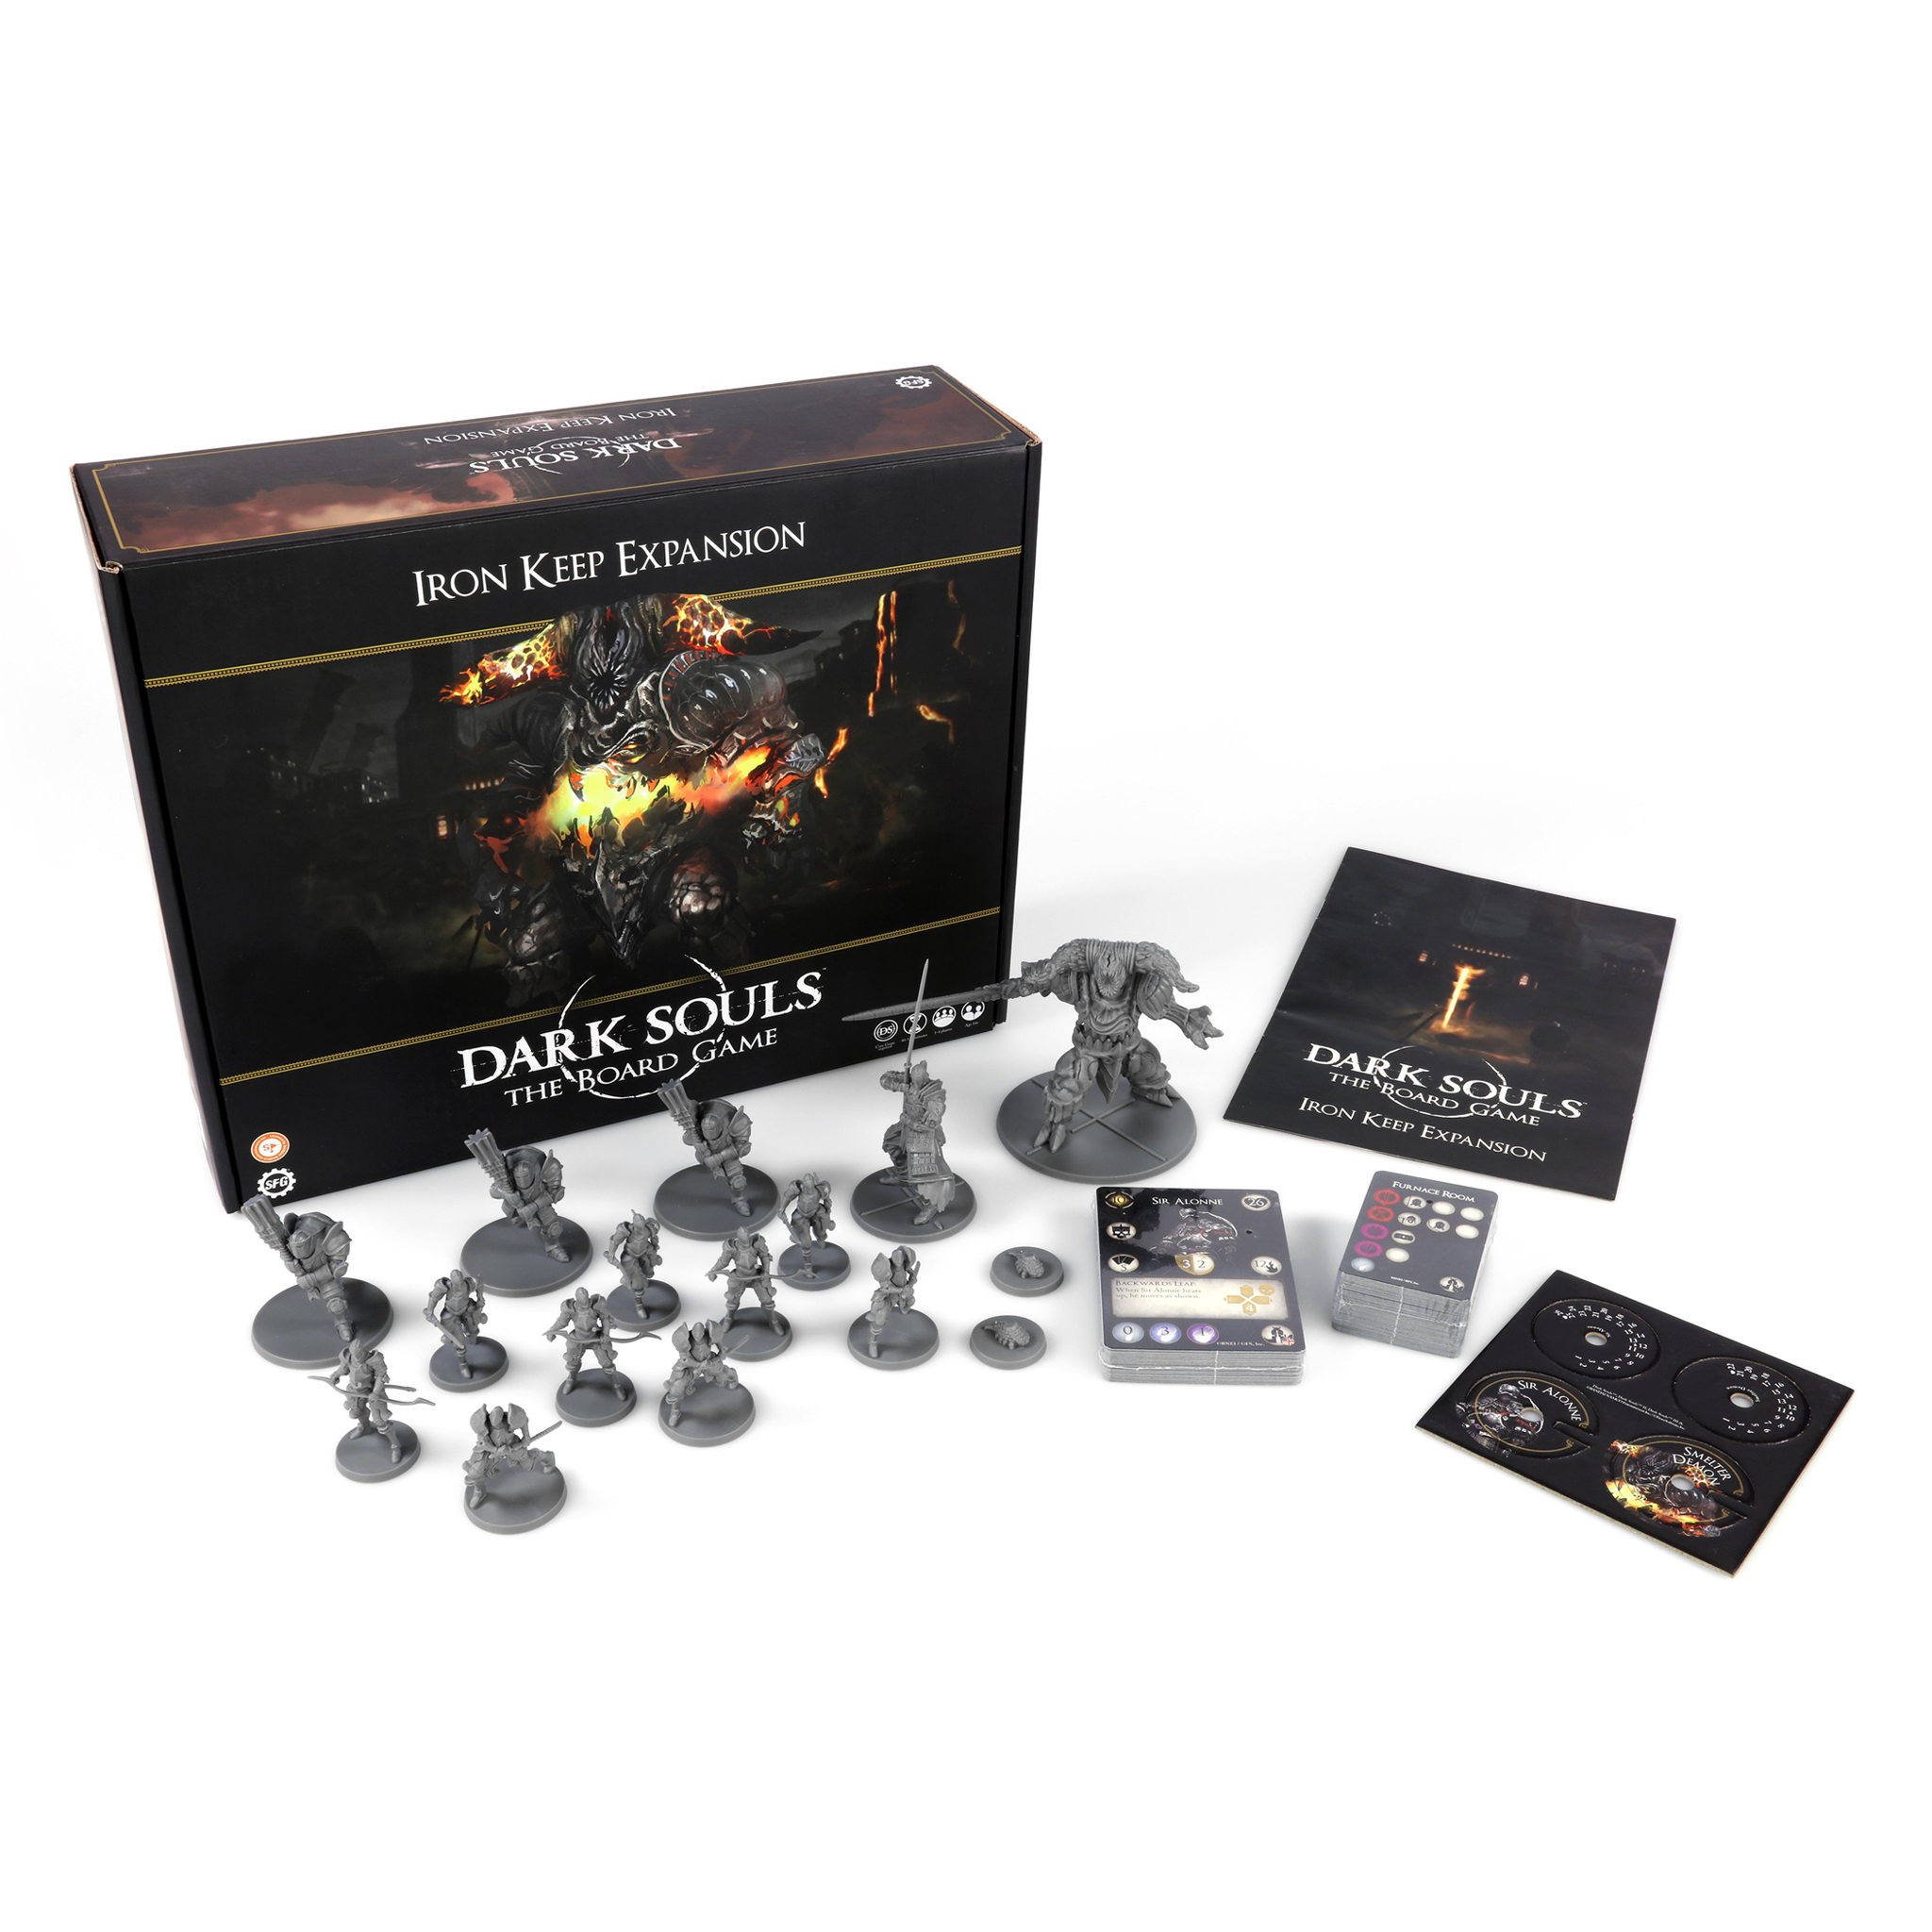 Dark Souls: Board Game - Iron Keep Expansion